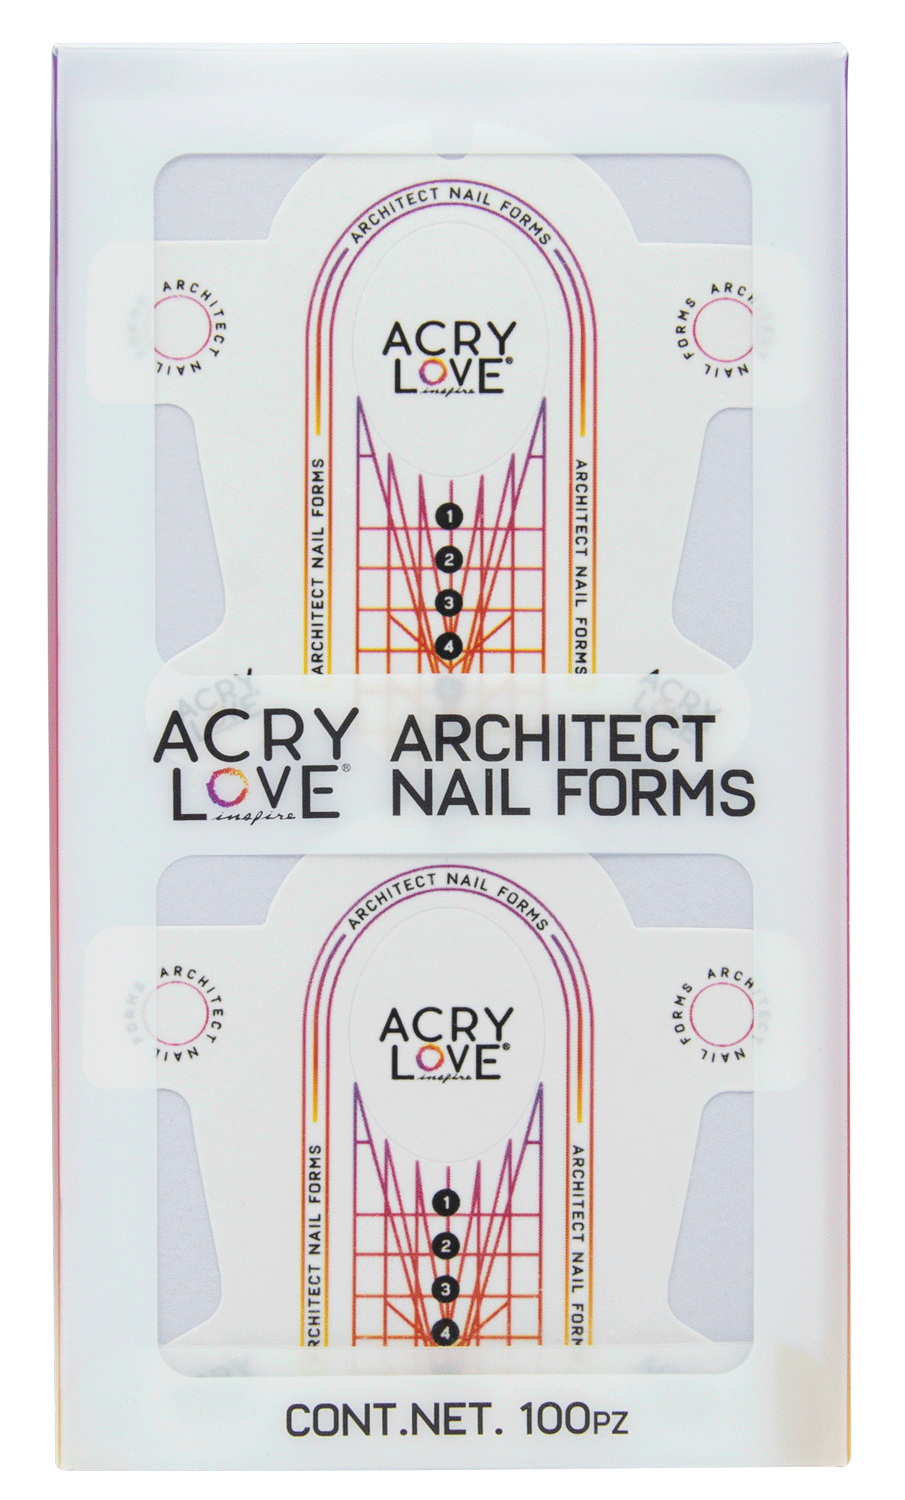 Acrylove - Architect Nail Forms